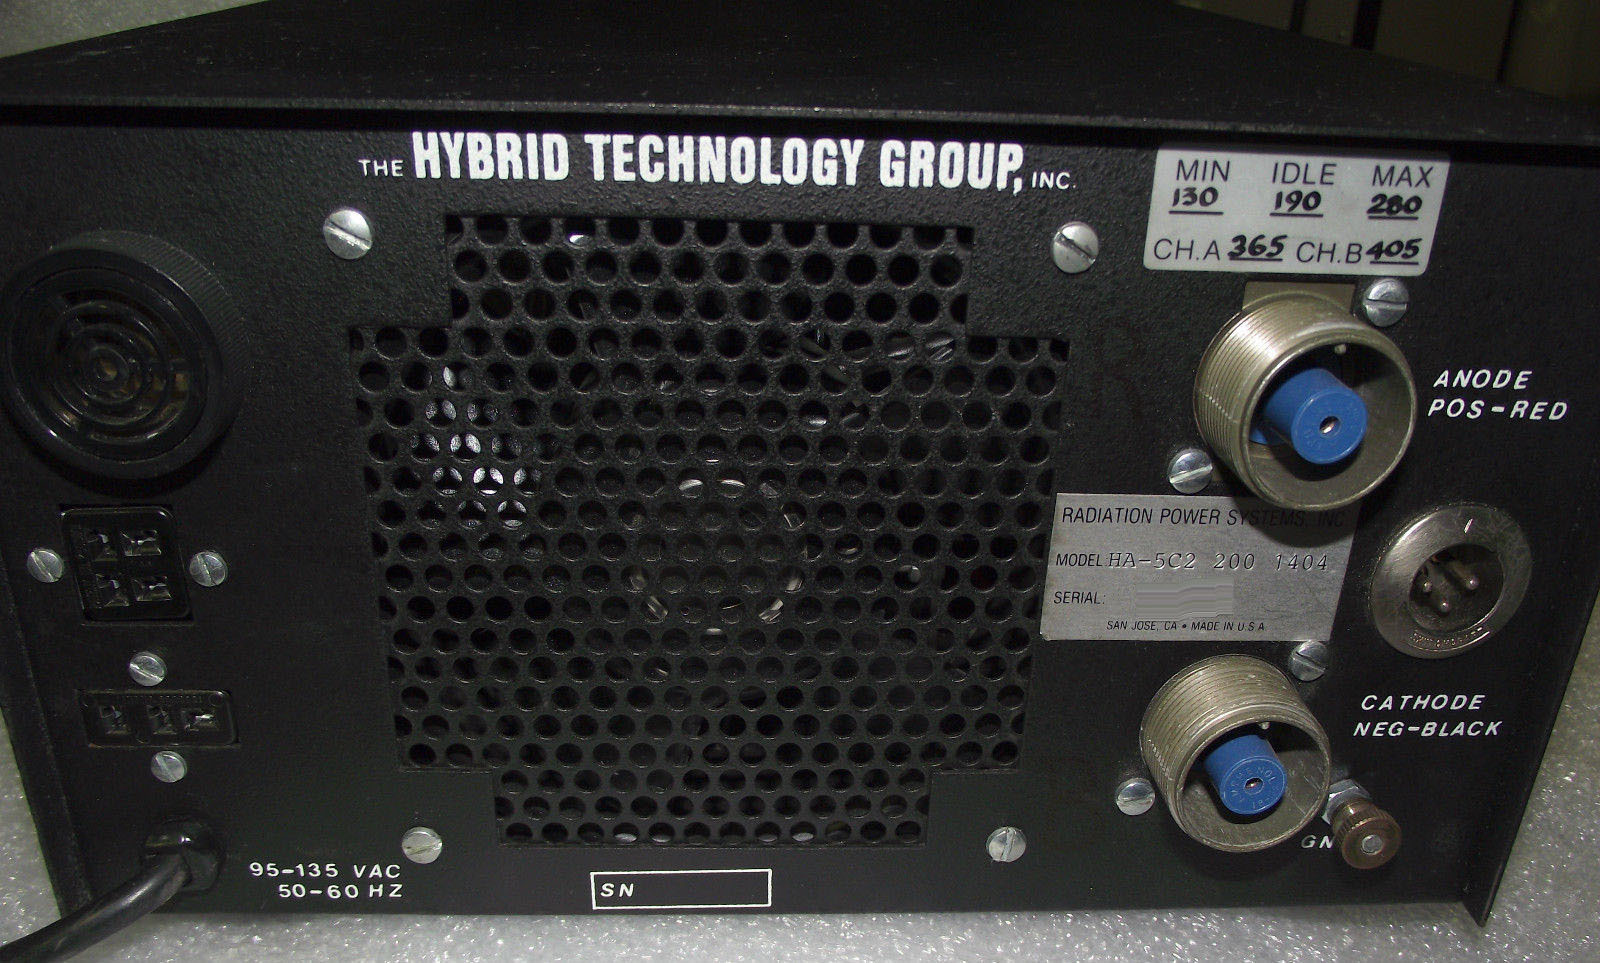 图为 已使用的 RADIATION POWER SYSTEMS HA-5C2 200 1404 待售